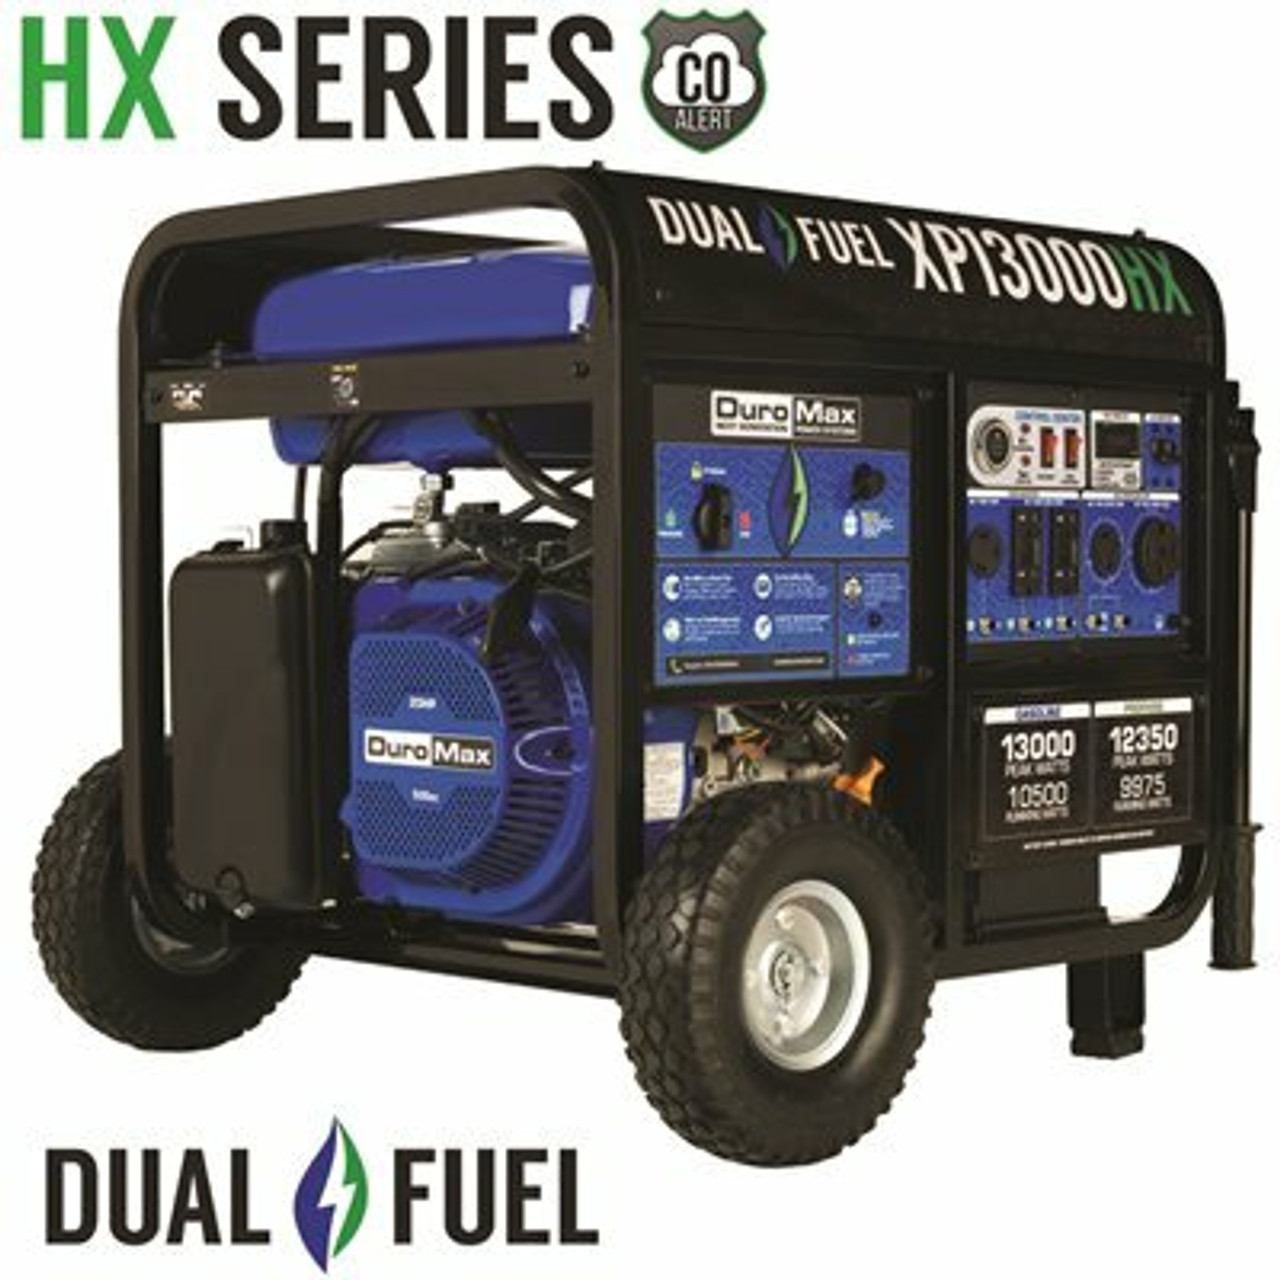 13000/10500-Watt Dual Fuel Electric Start Gasoline/Propane Portable Home Power Back Up Generator With Co Alert Shutdown